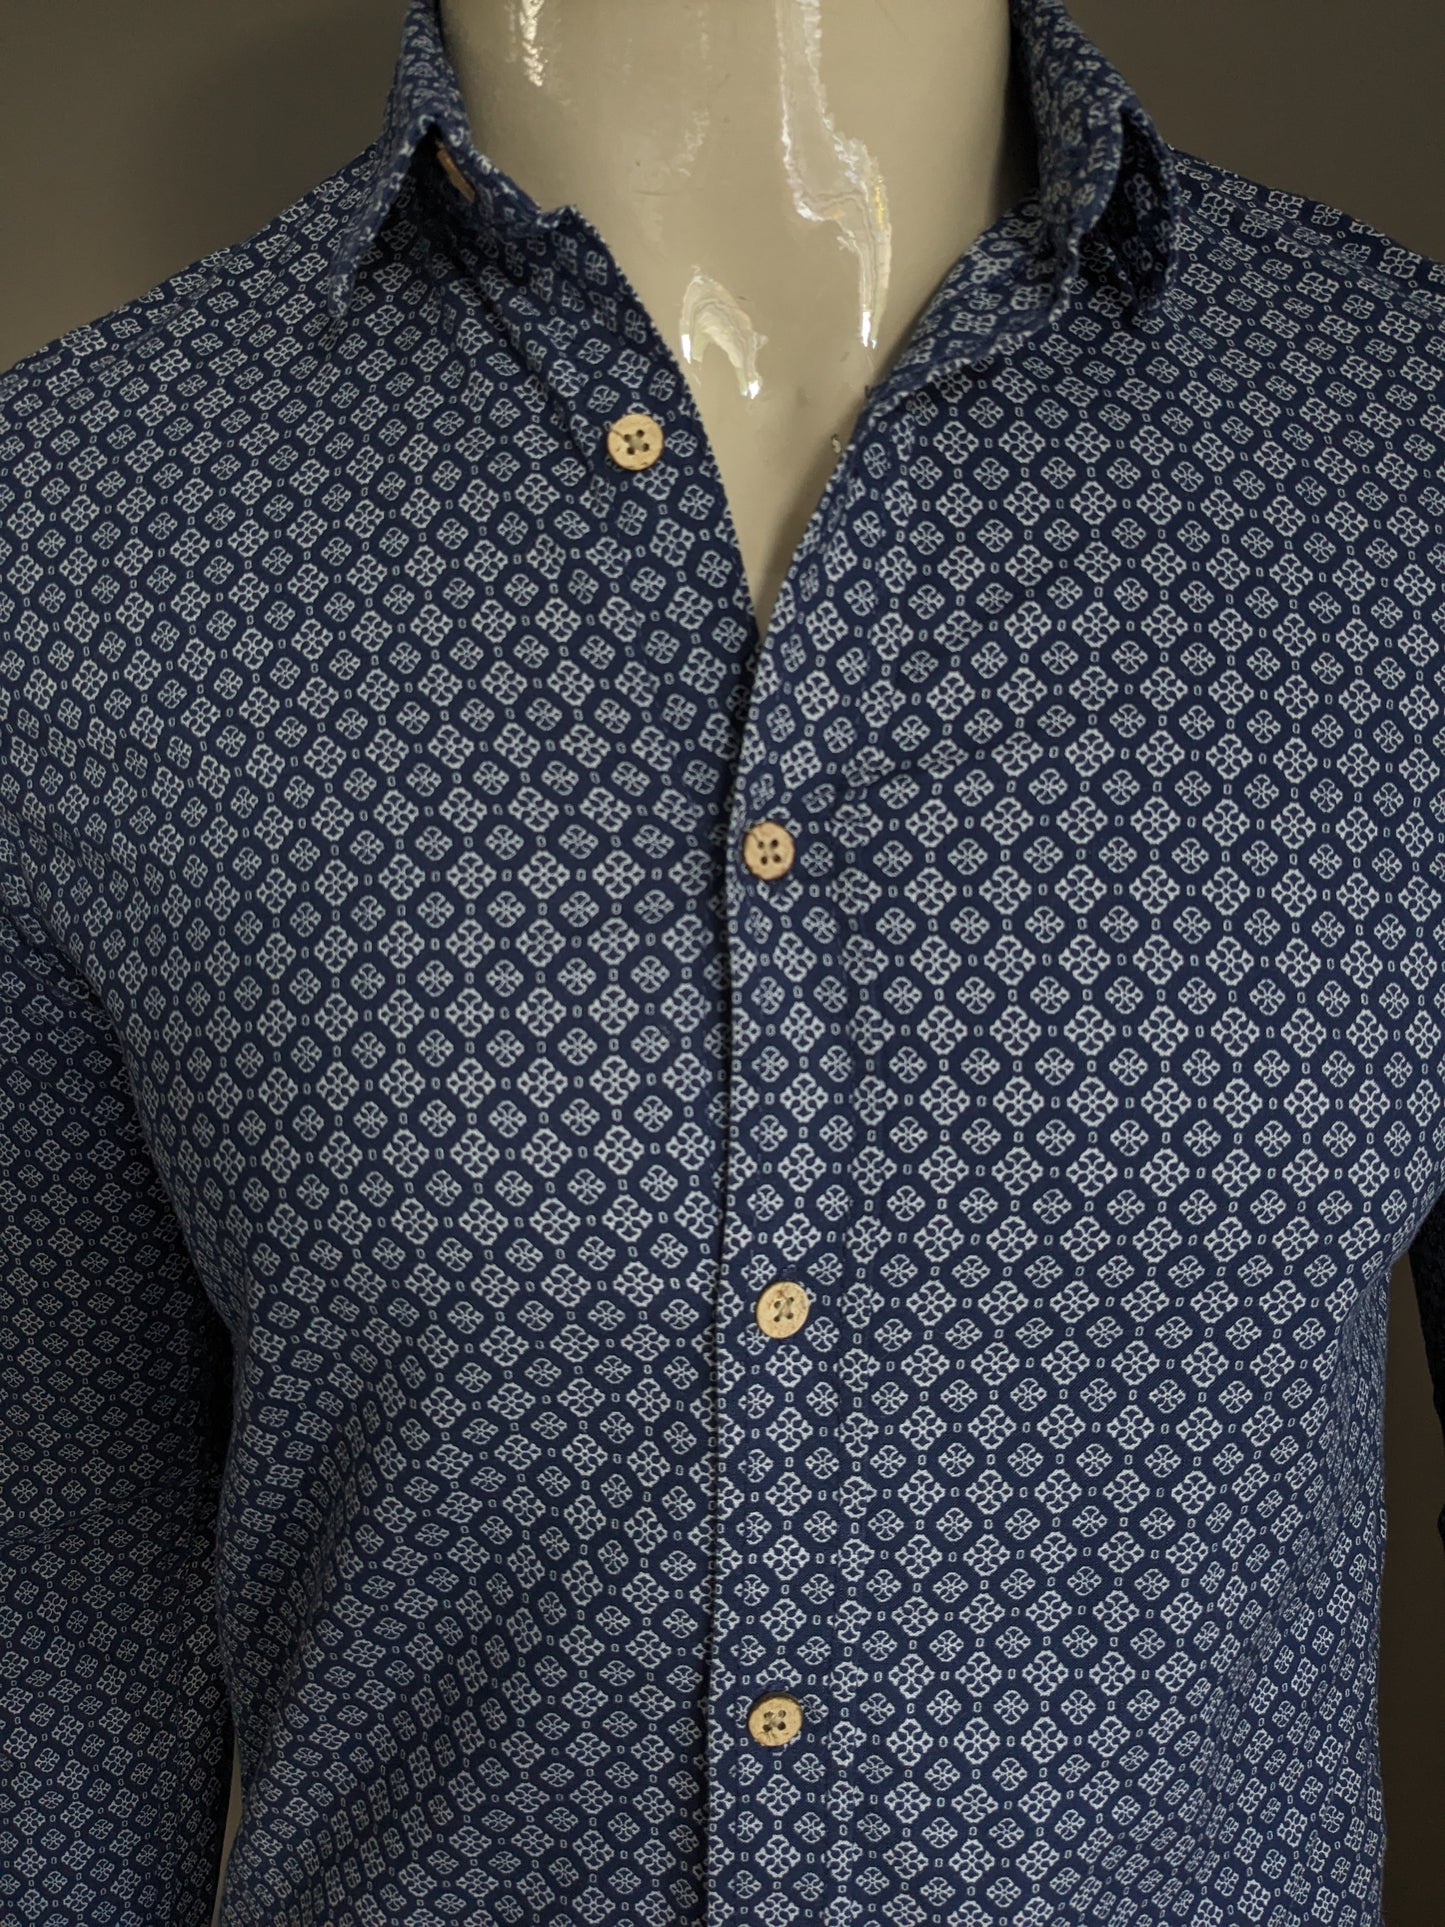 Tom Tailor Denim shirt. Blue white print. Size S.